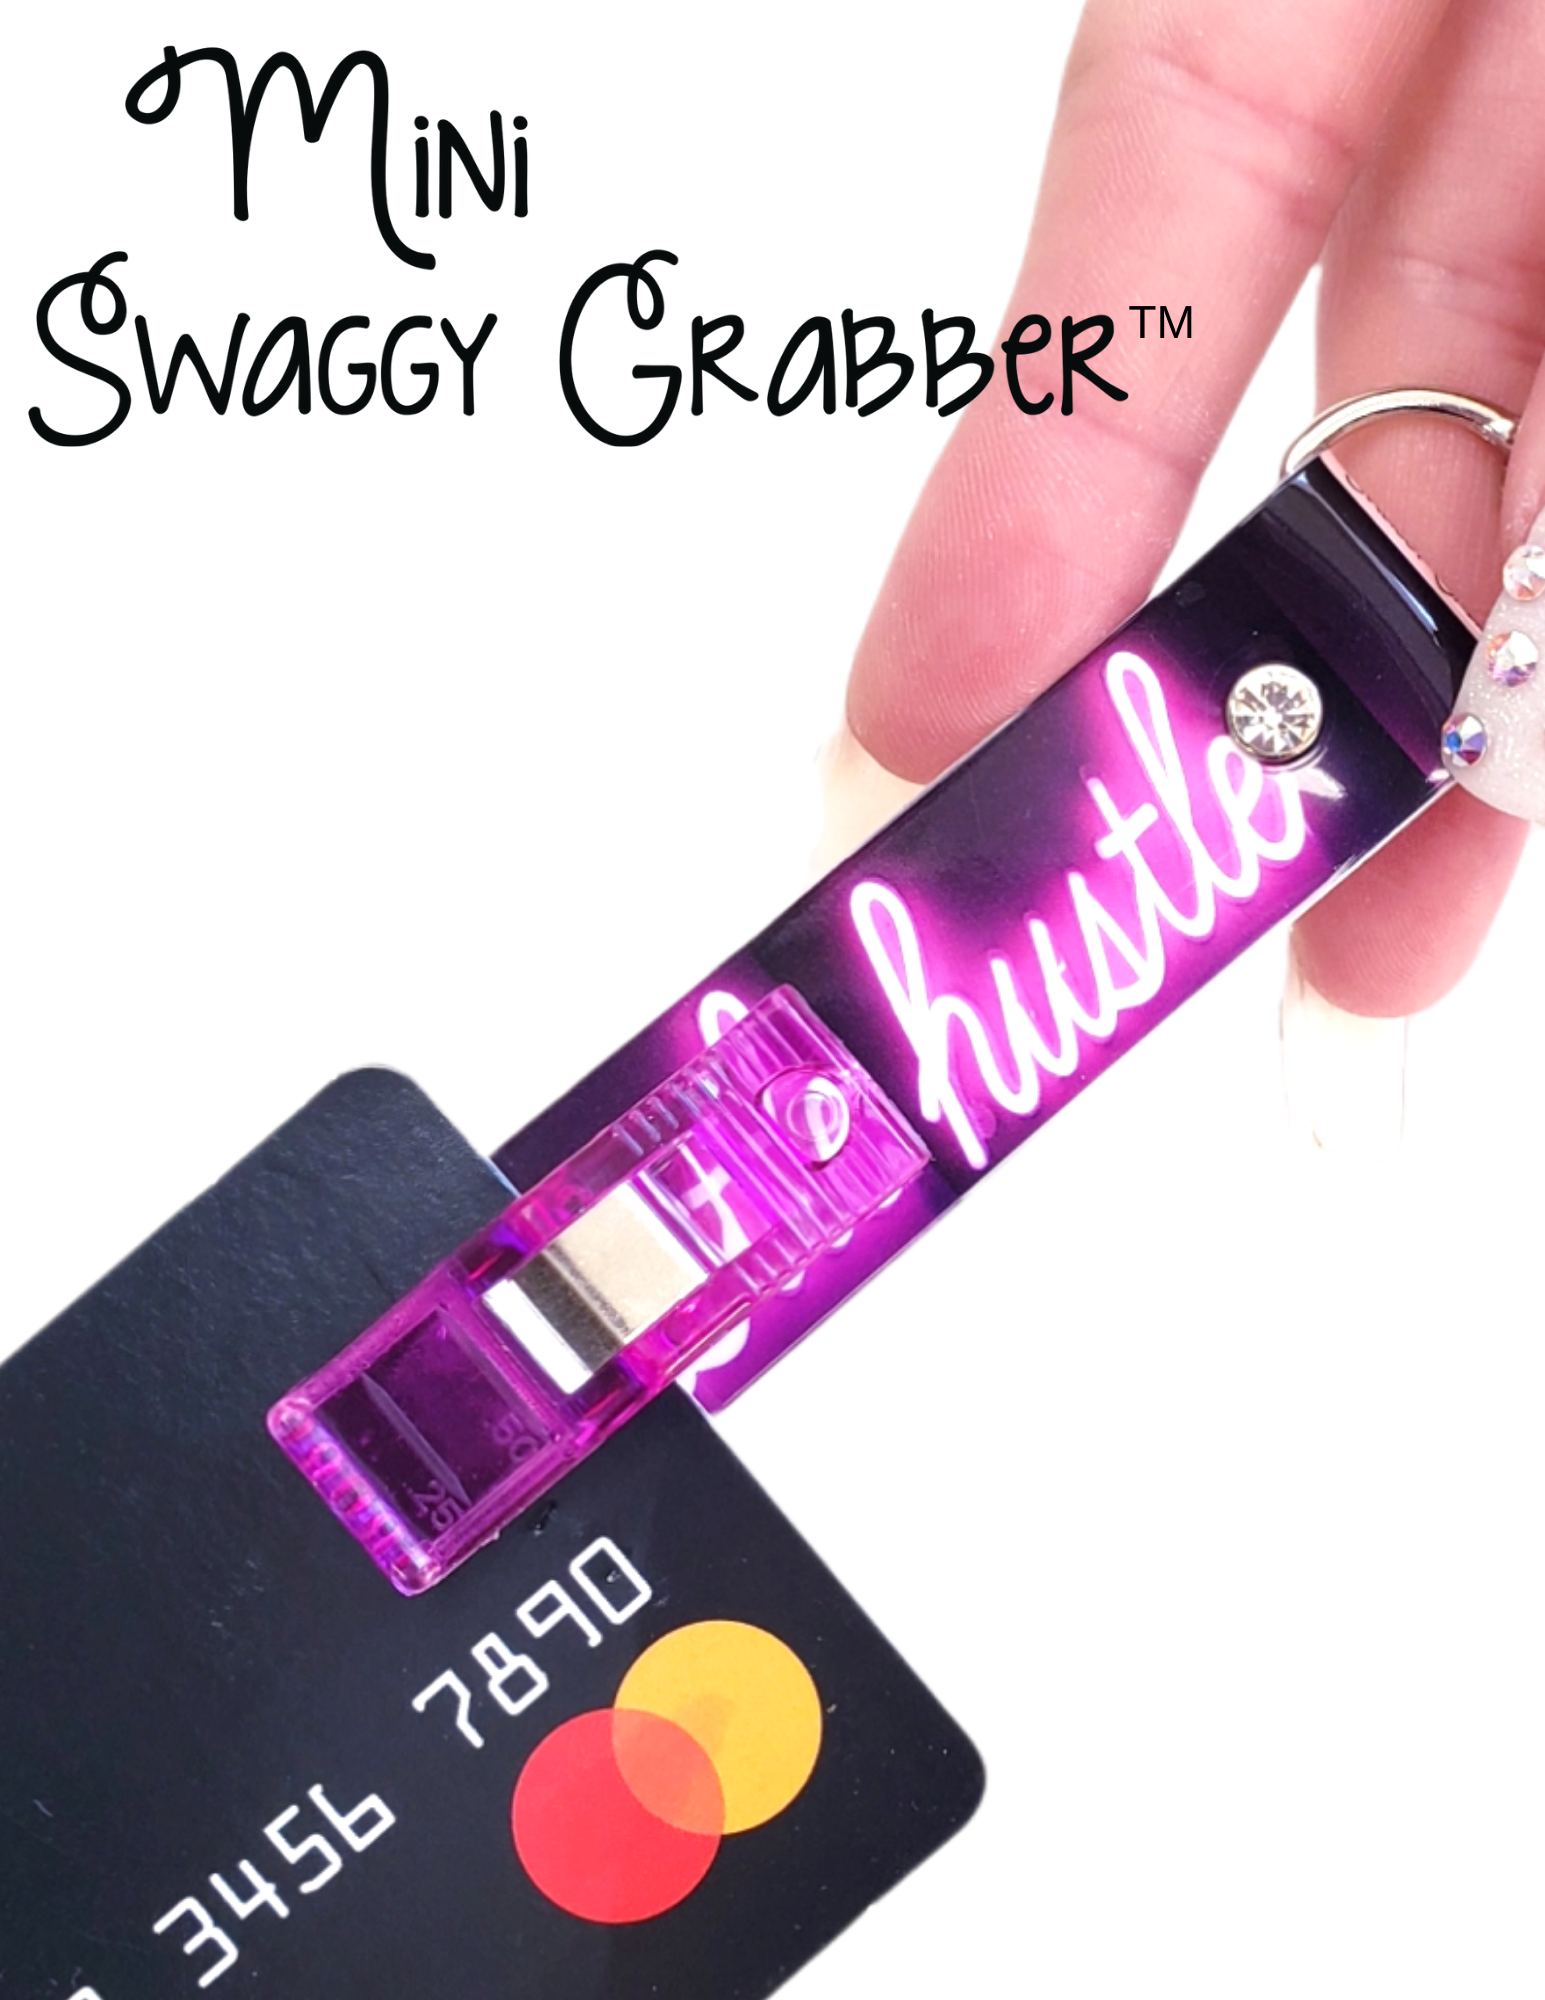 5-in-1 Jewelry Helper Tool & Original Card Grabber The Mini Swaggy